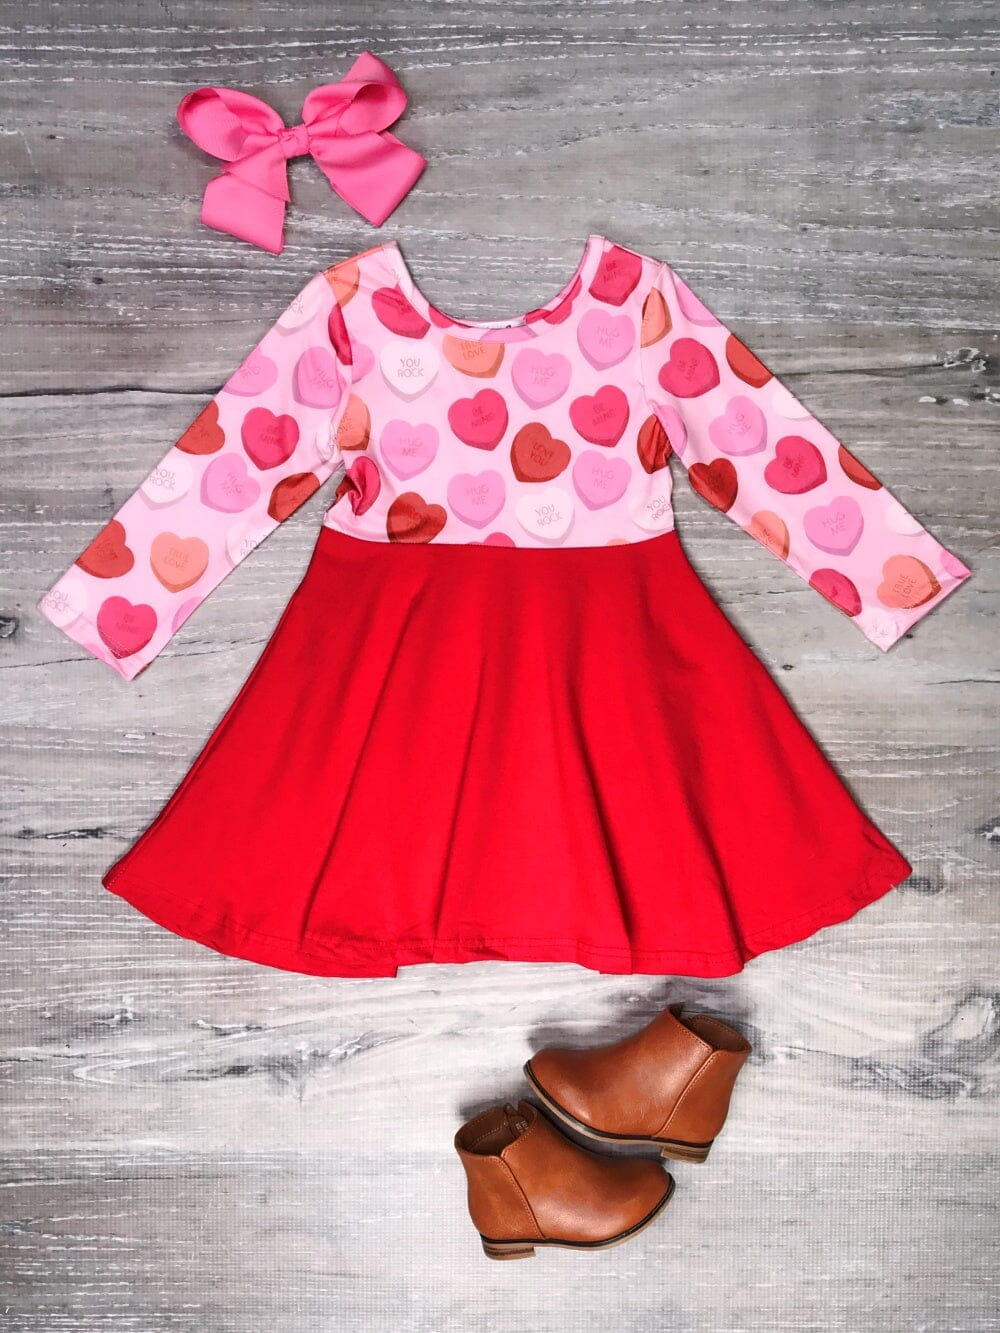 valentines day heart dress